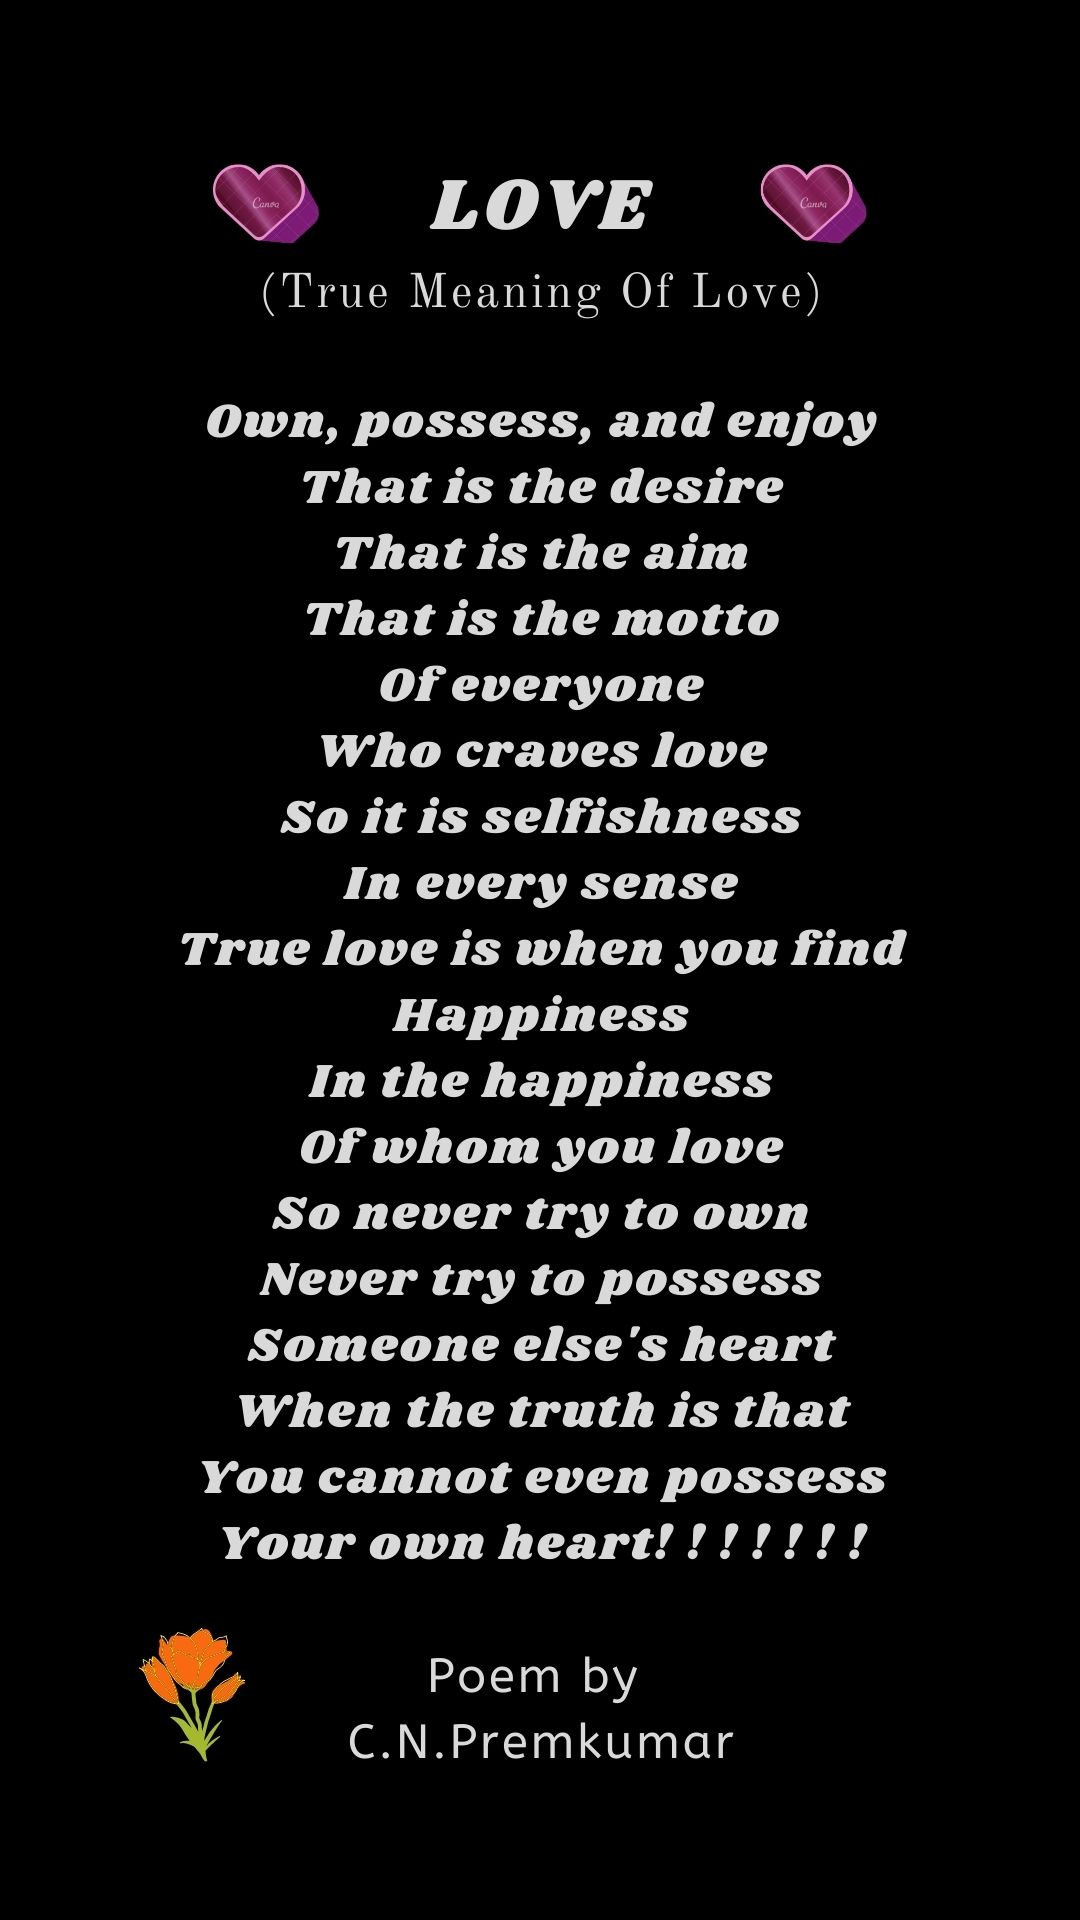 Definition of True Love  Meaning of love, True, True love